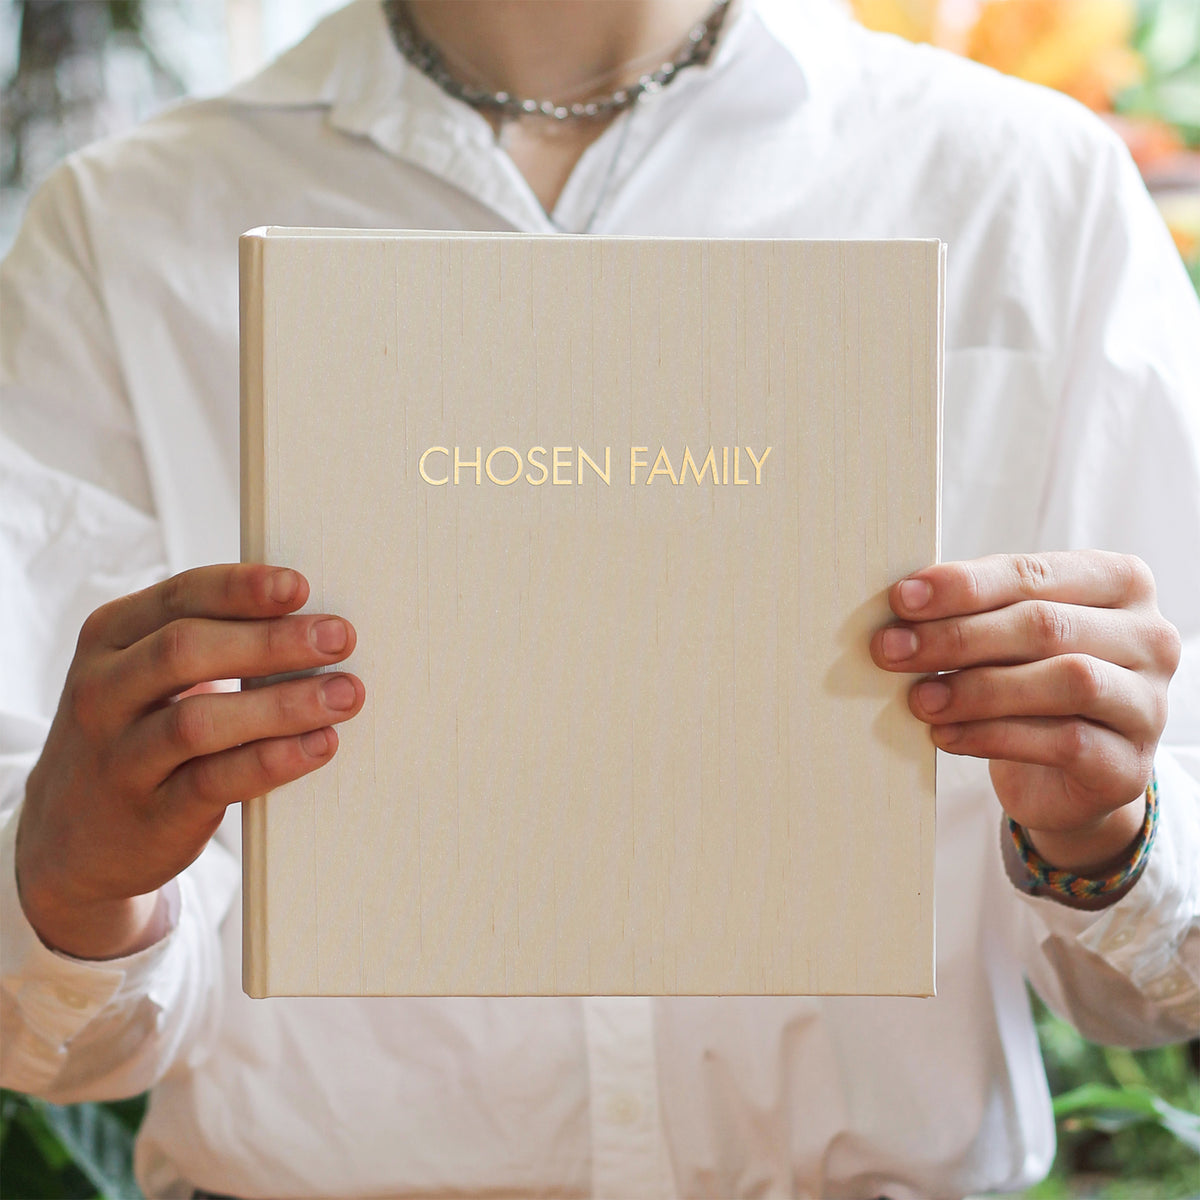 Chosen Family Album | Medium Photo Binder for 4 x 6 photos | with Champagne Silk Cover